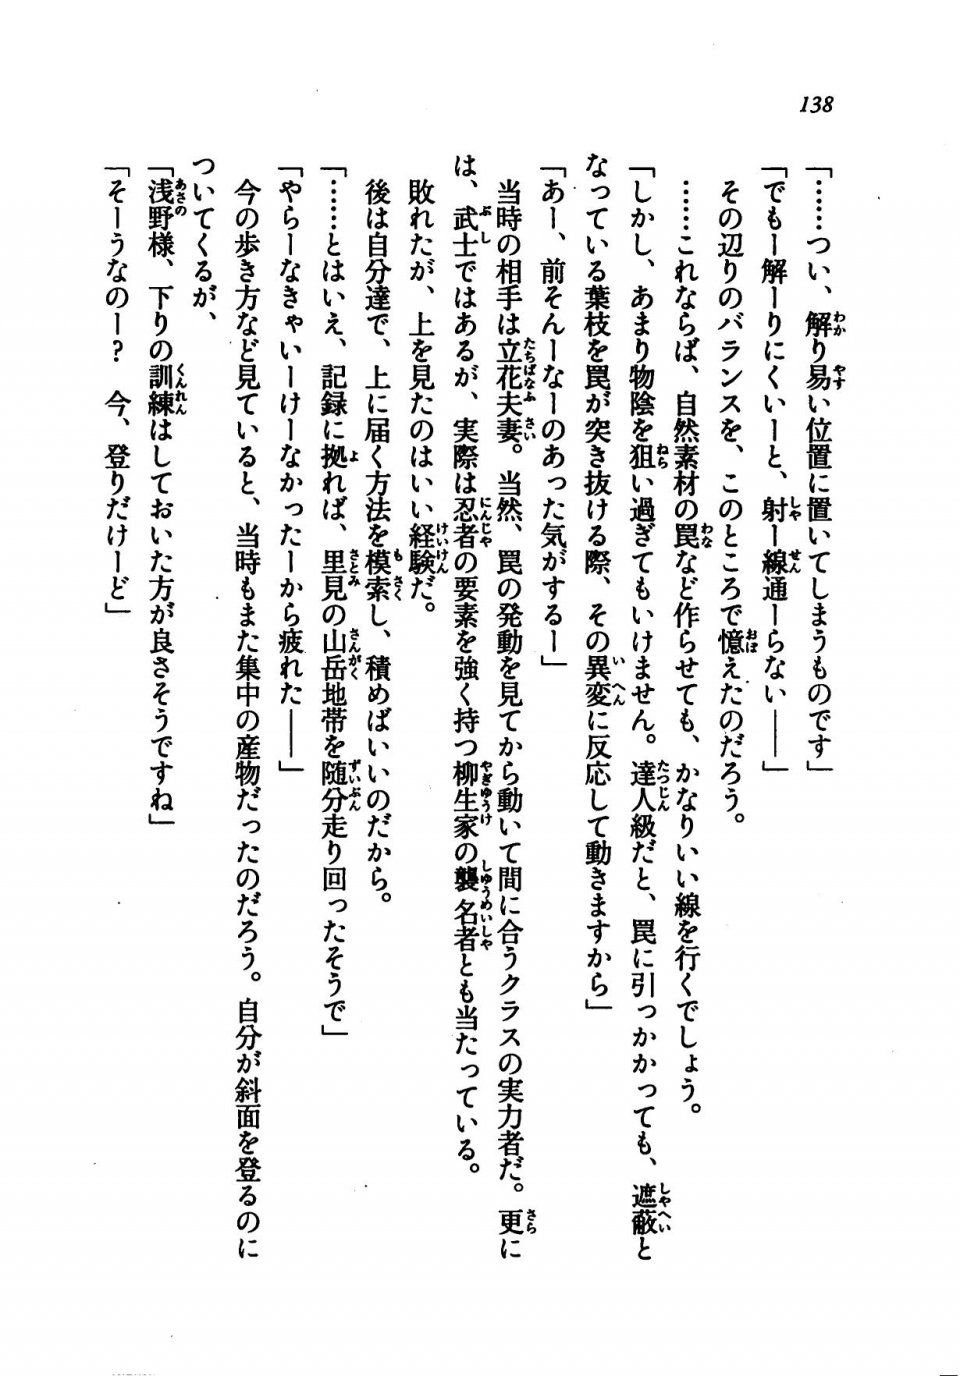 Kyoukai Senjou no Horizon LN Vol 21(8C) Part 1 - Photo #137